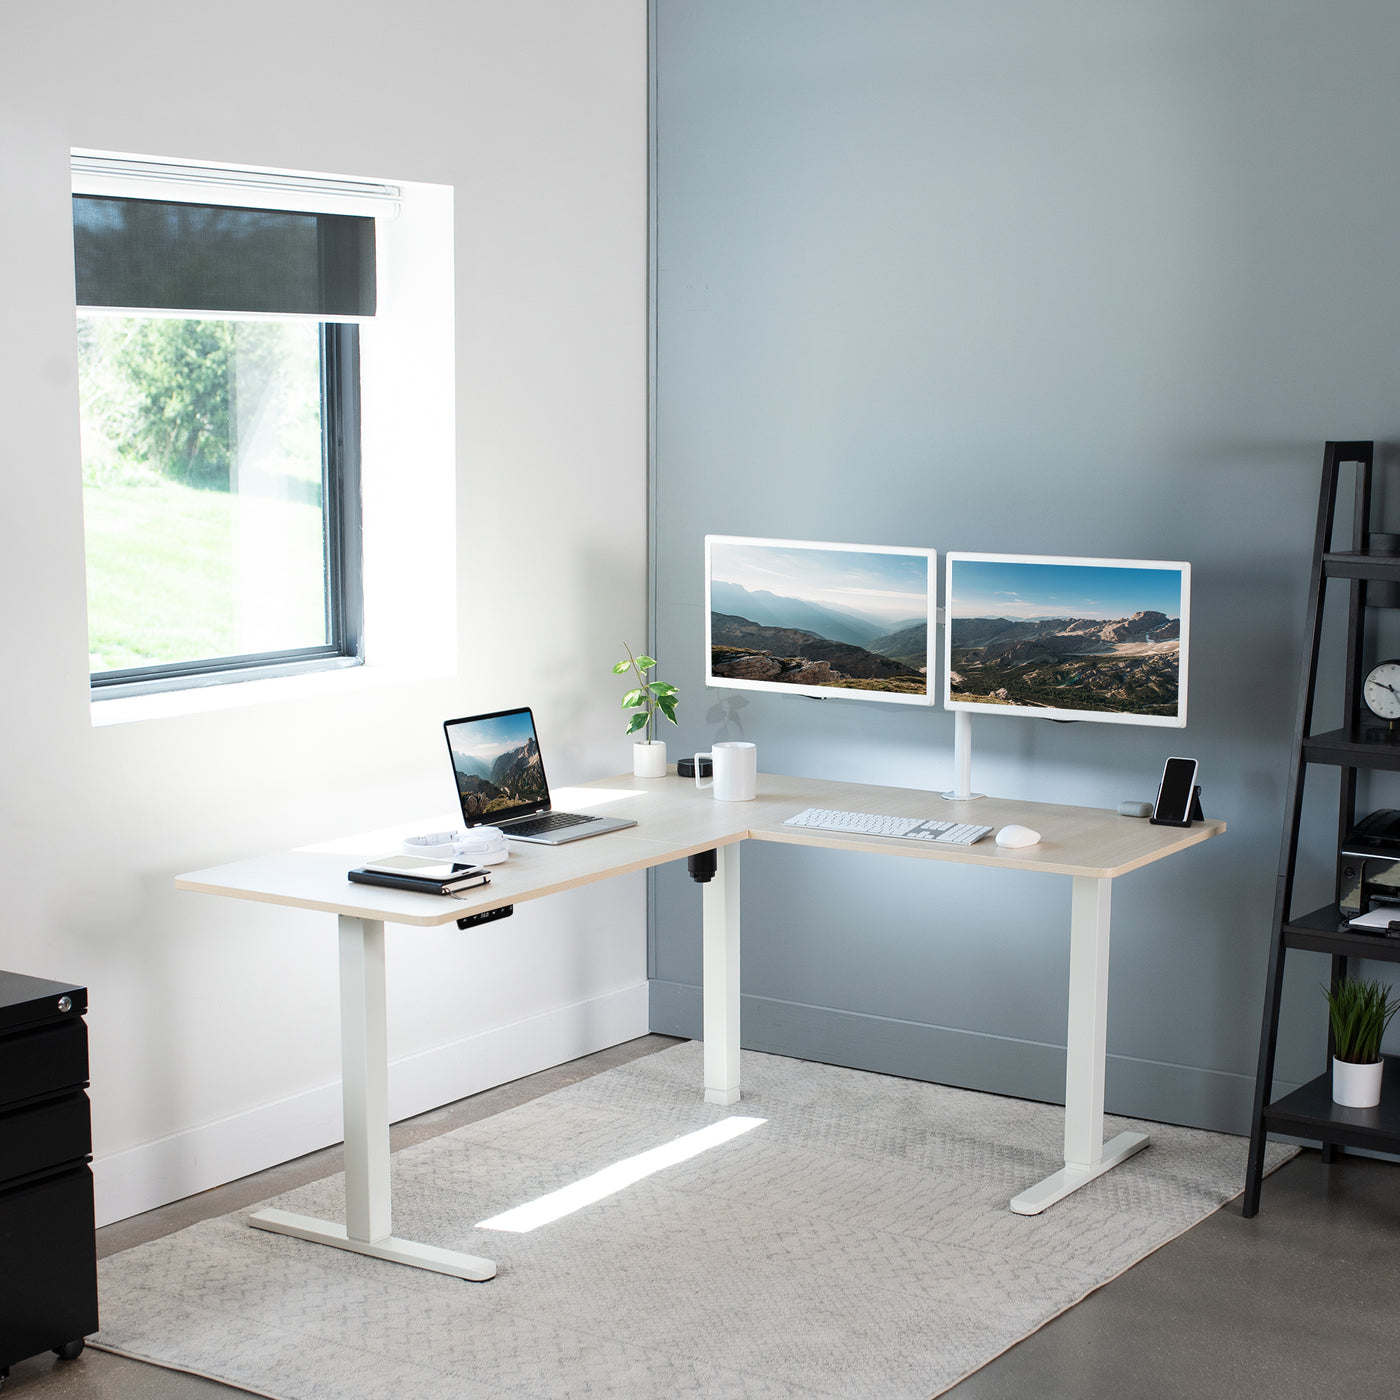 Electric heavy-duty corner desk workstation for modern office workspaces. 